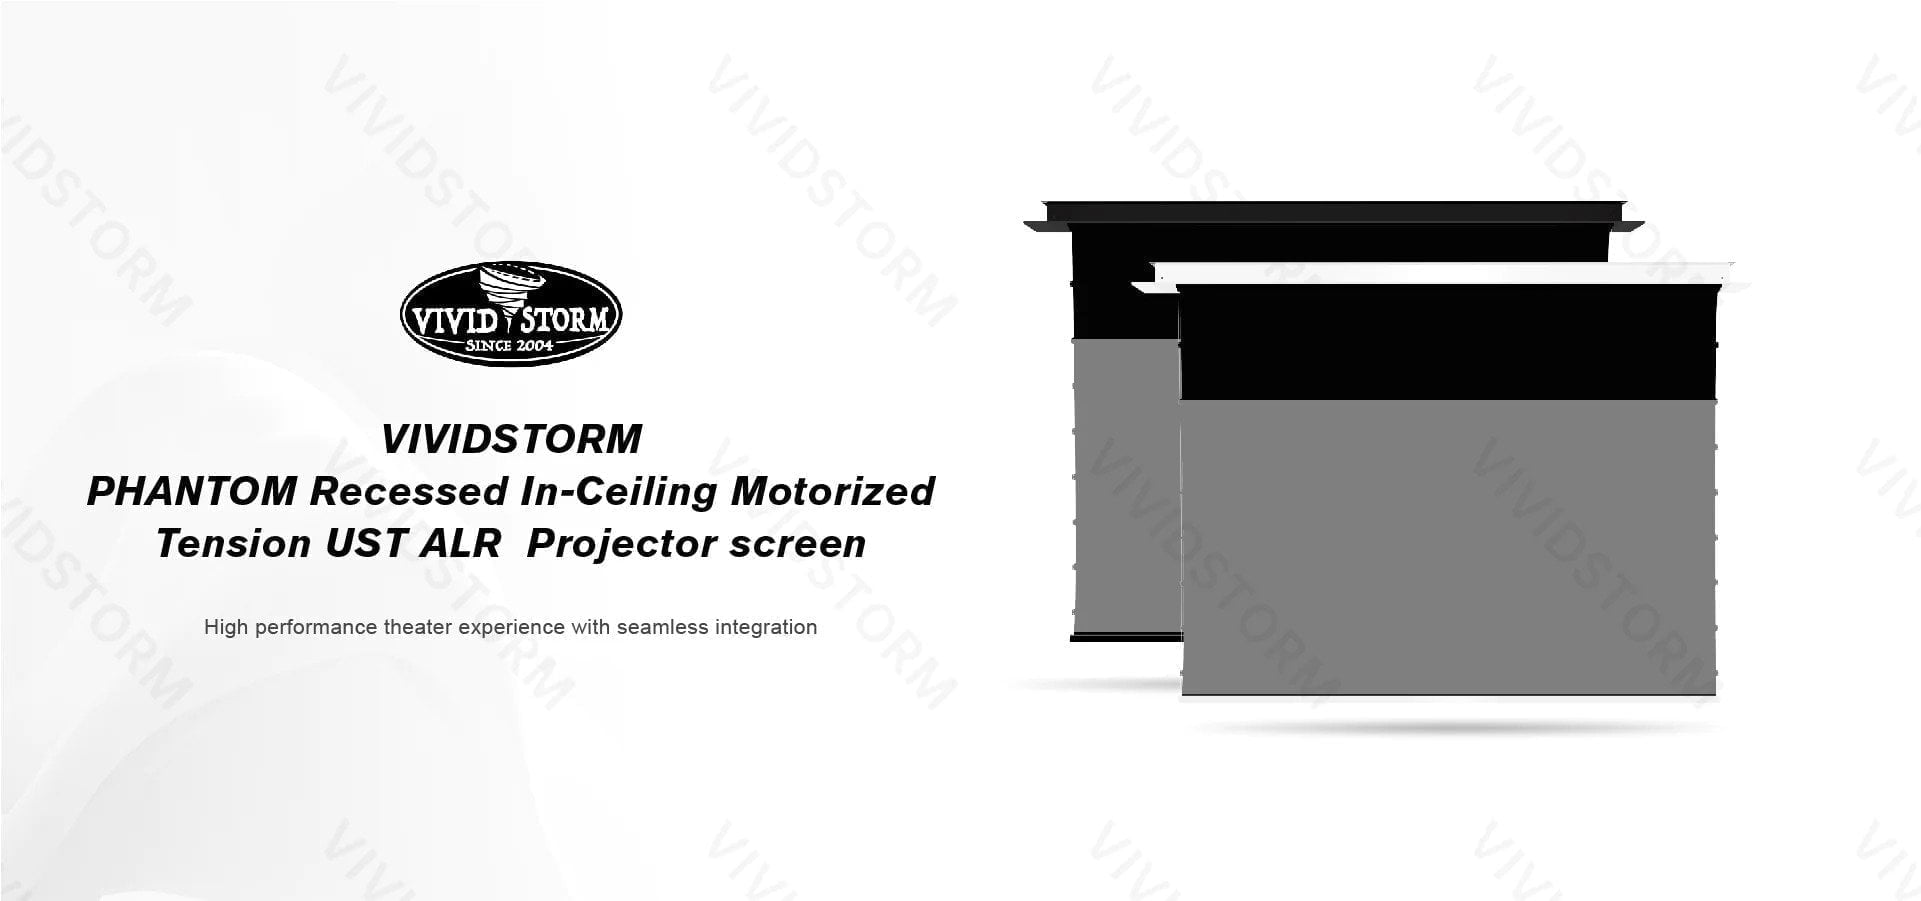 VIVIDSTORM PHANTOM Recessed In-Ceiling Motorized Tension UST ALR Projector Screen